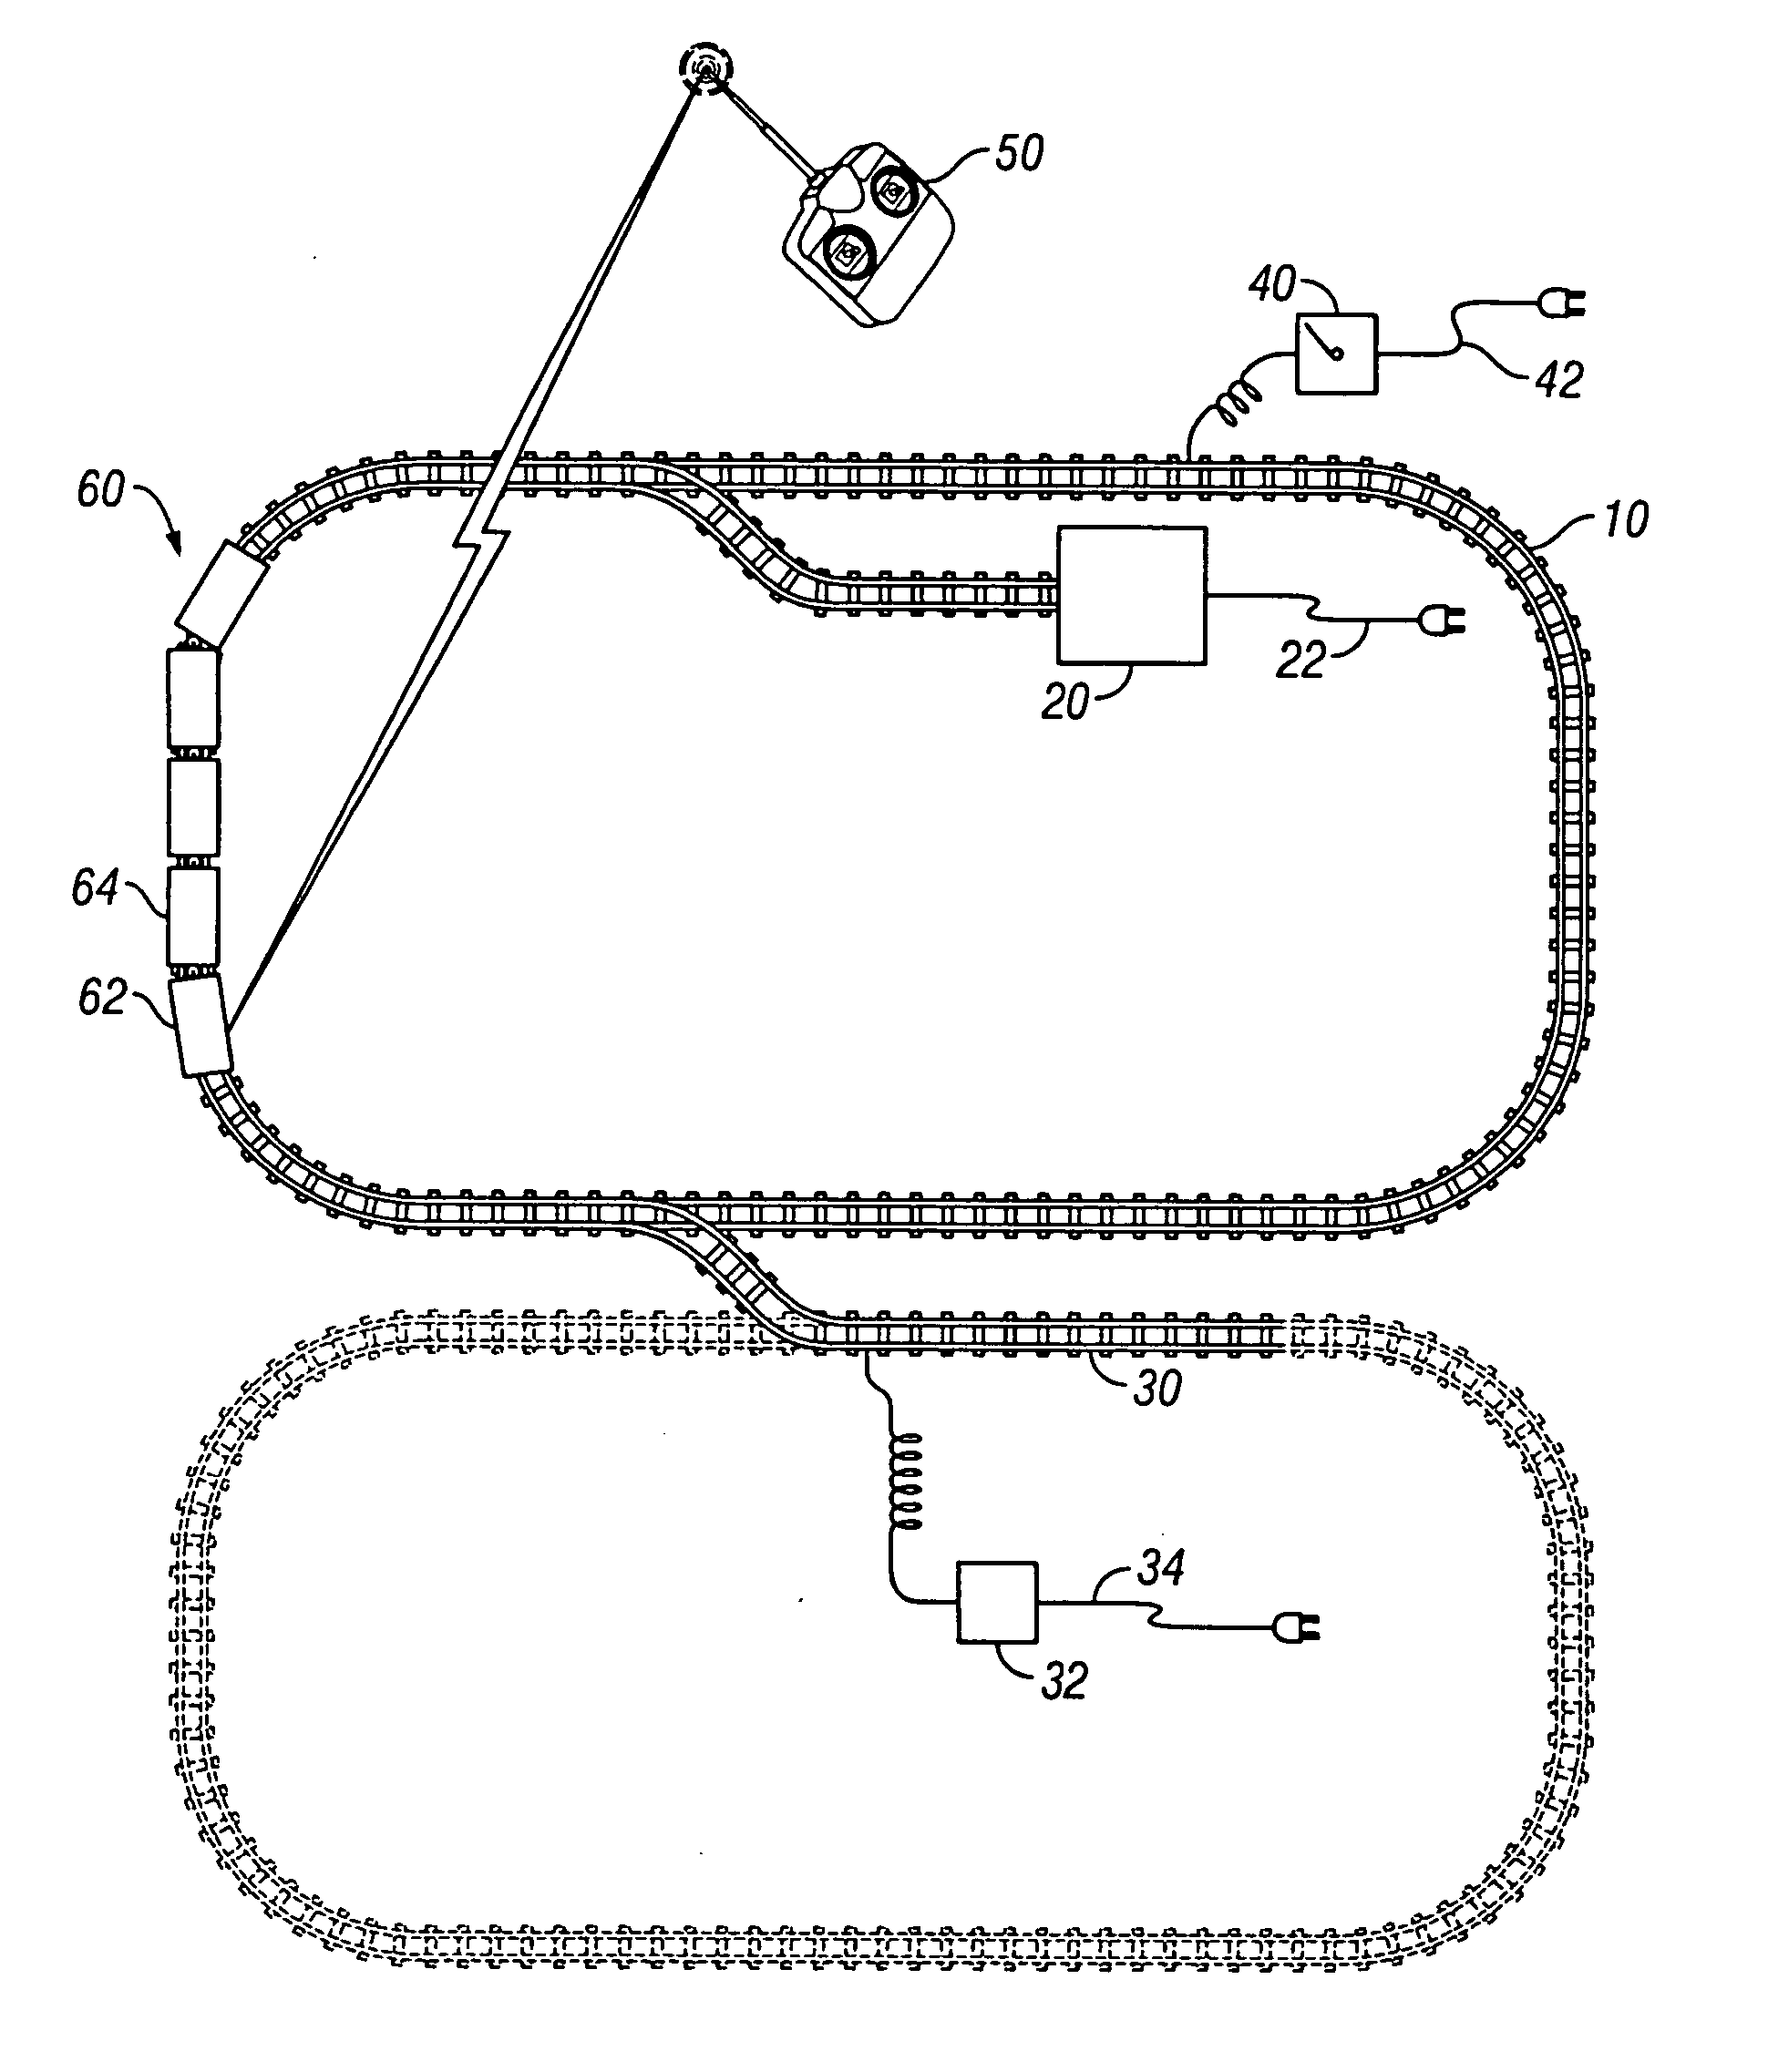 Model railroad system